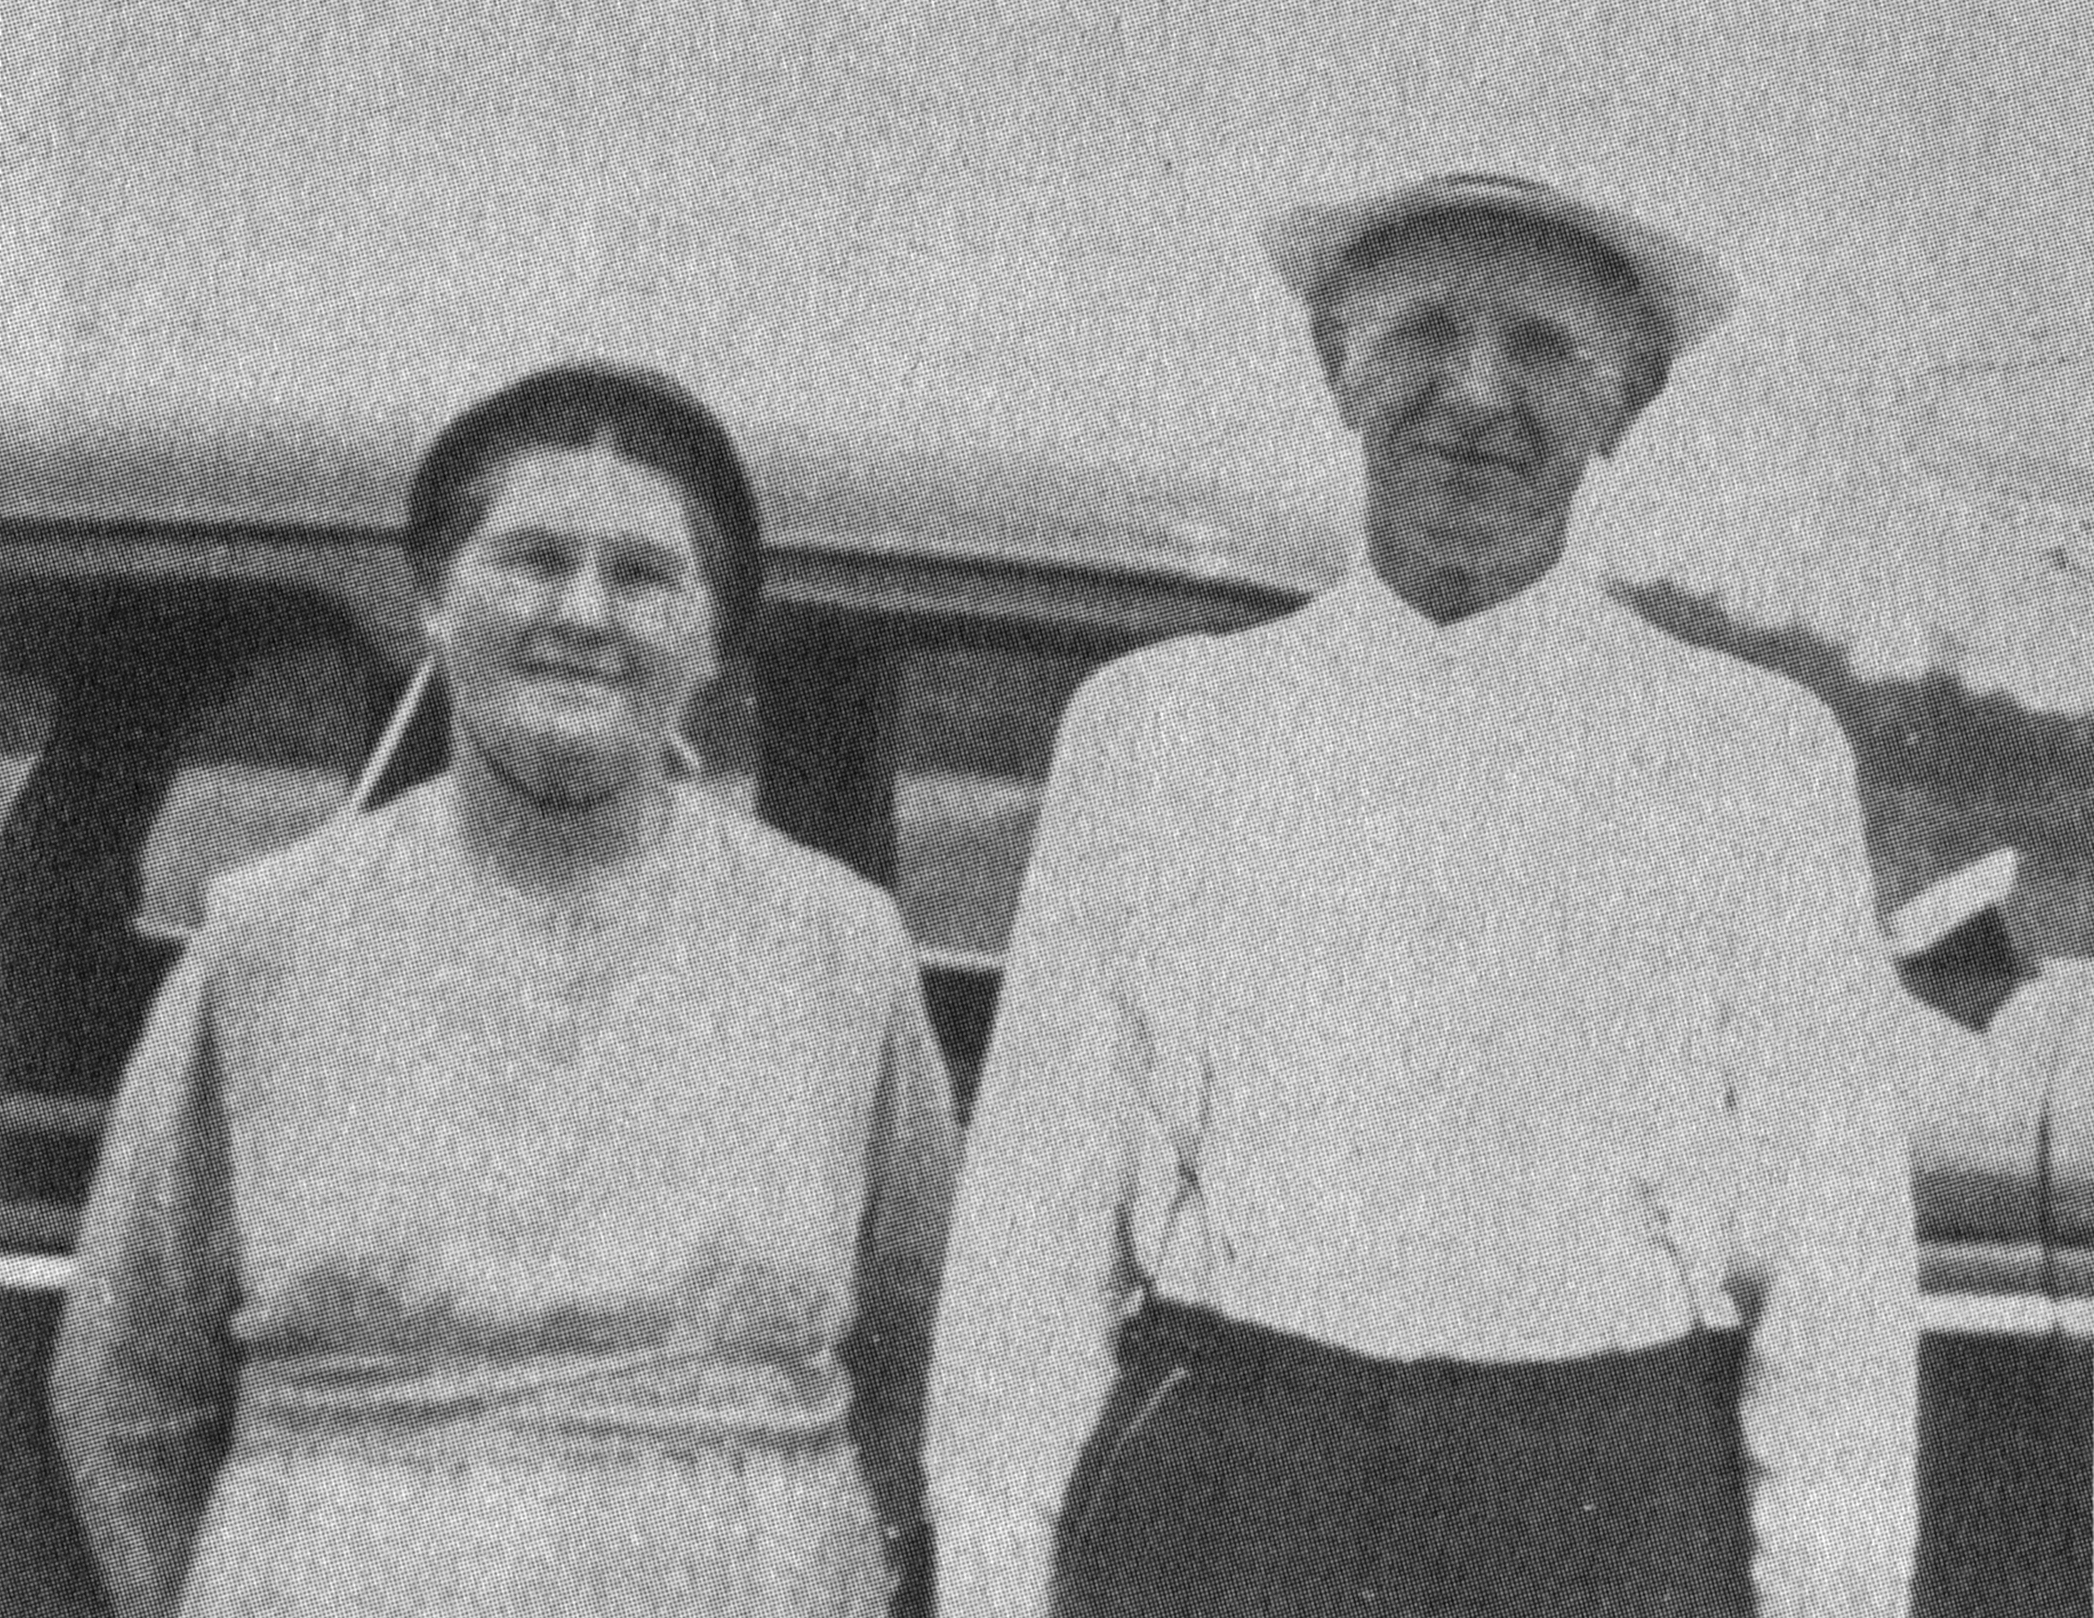 Aaron's Parents, John and Mary Shank